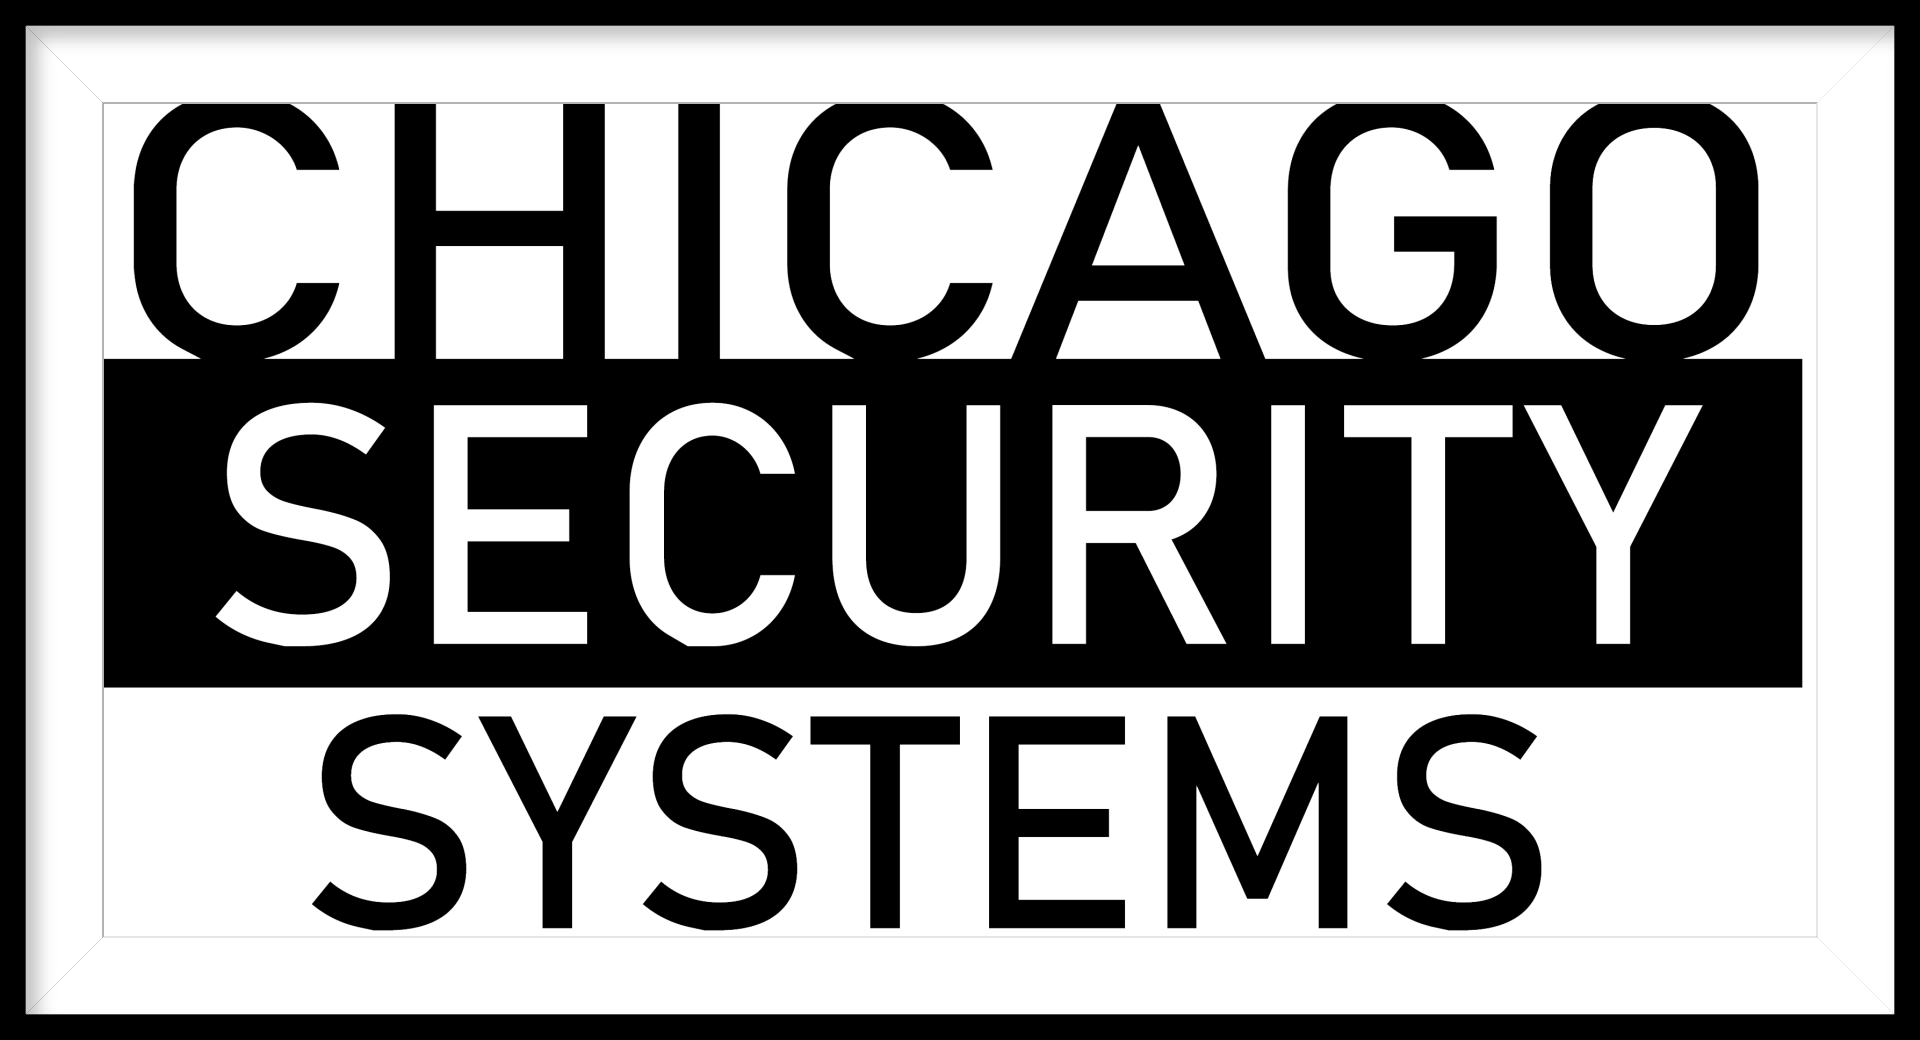 (c) Chicagosecuritysystems.com